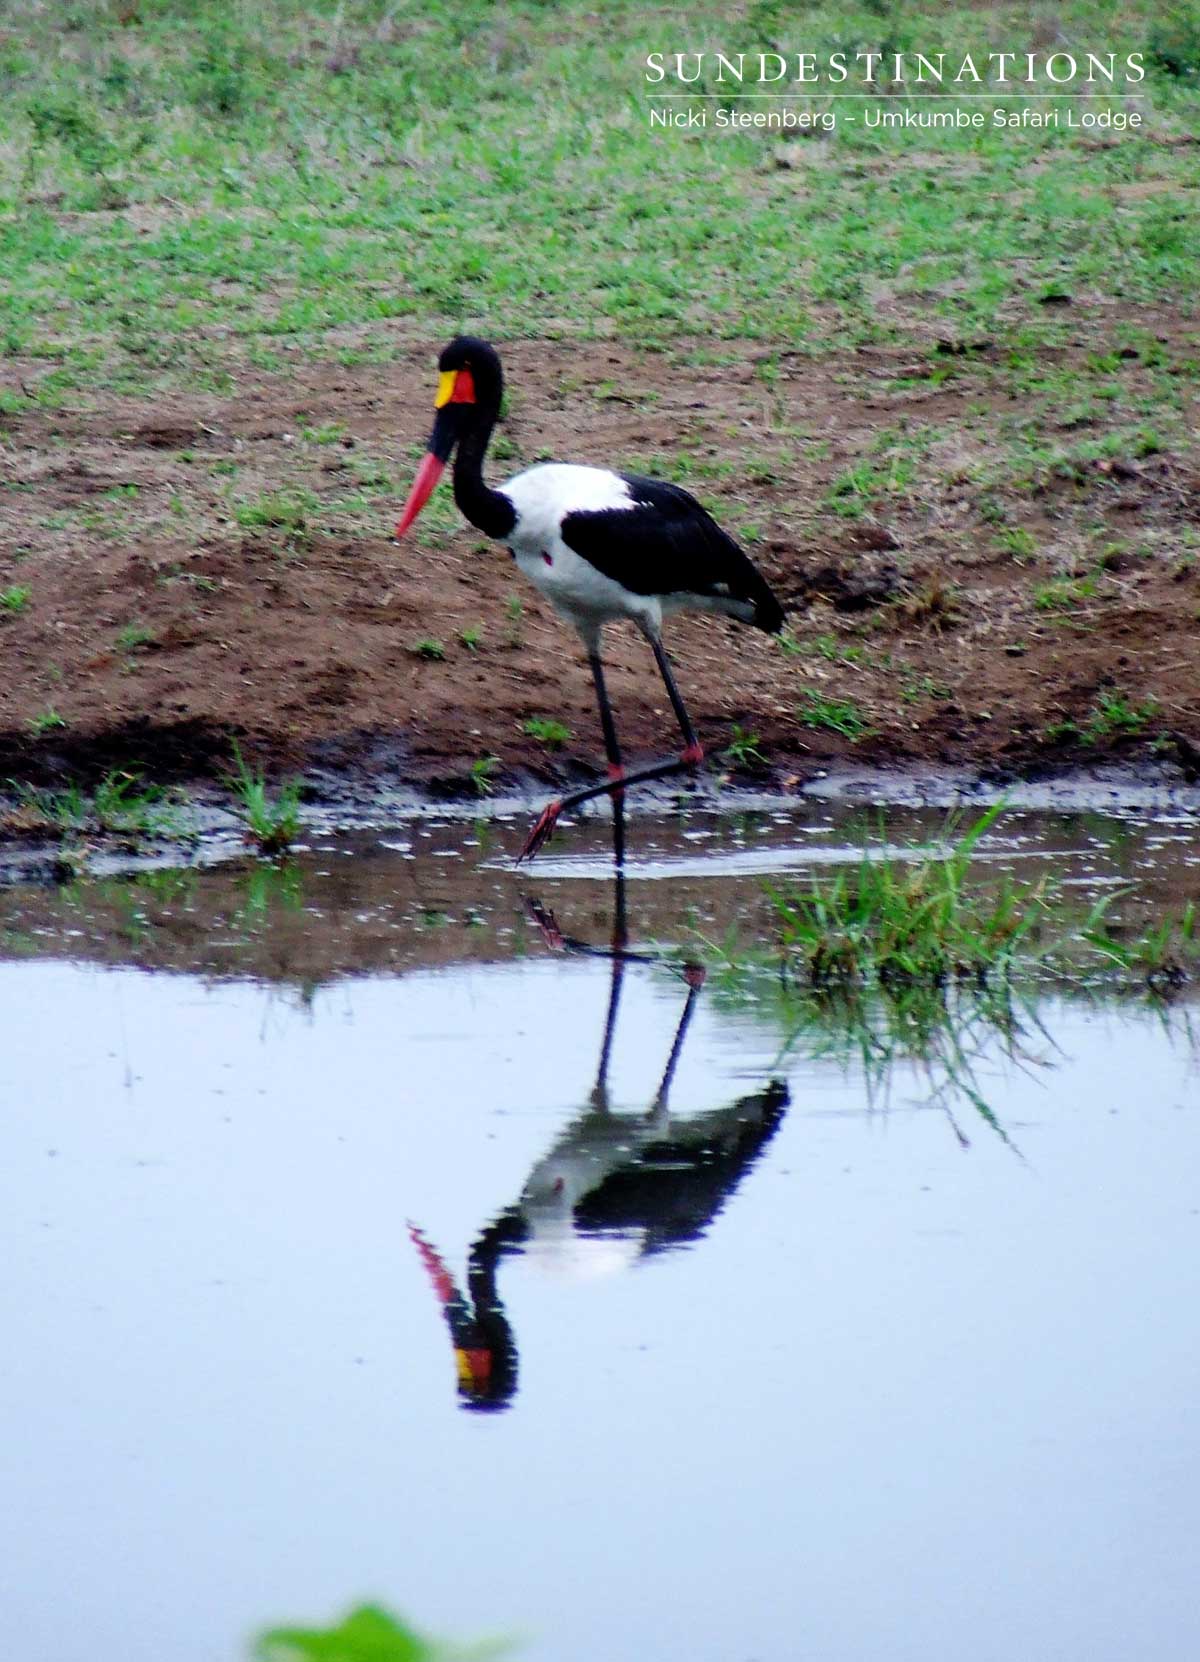 Saddlie-billed Stork